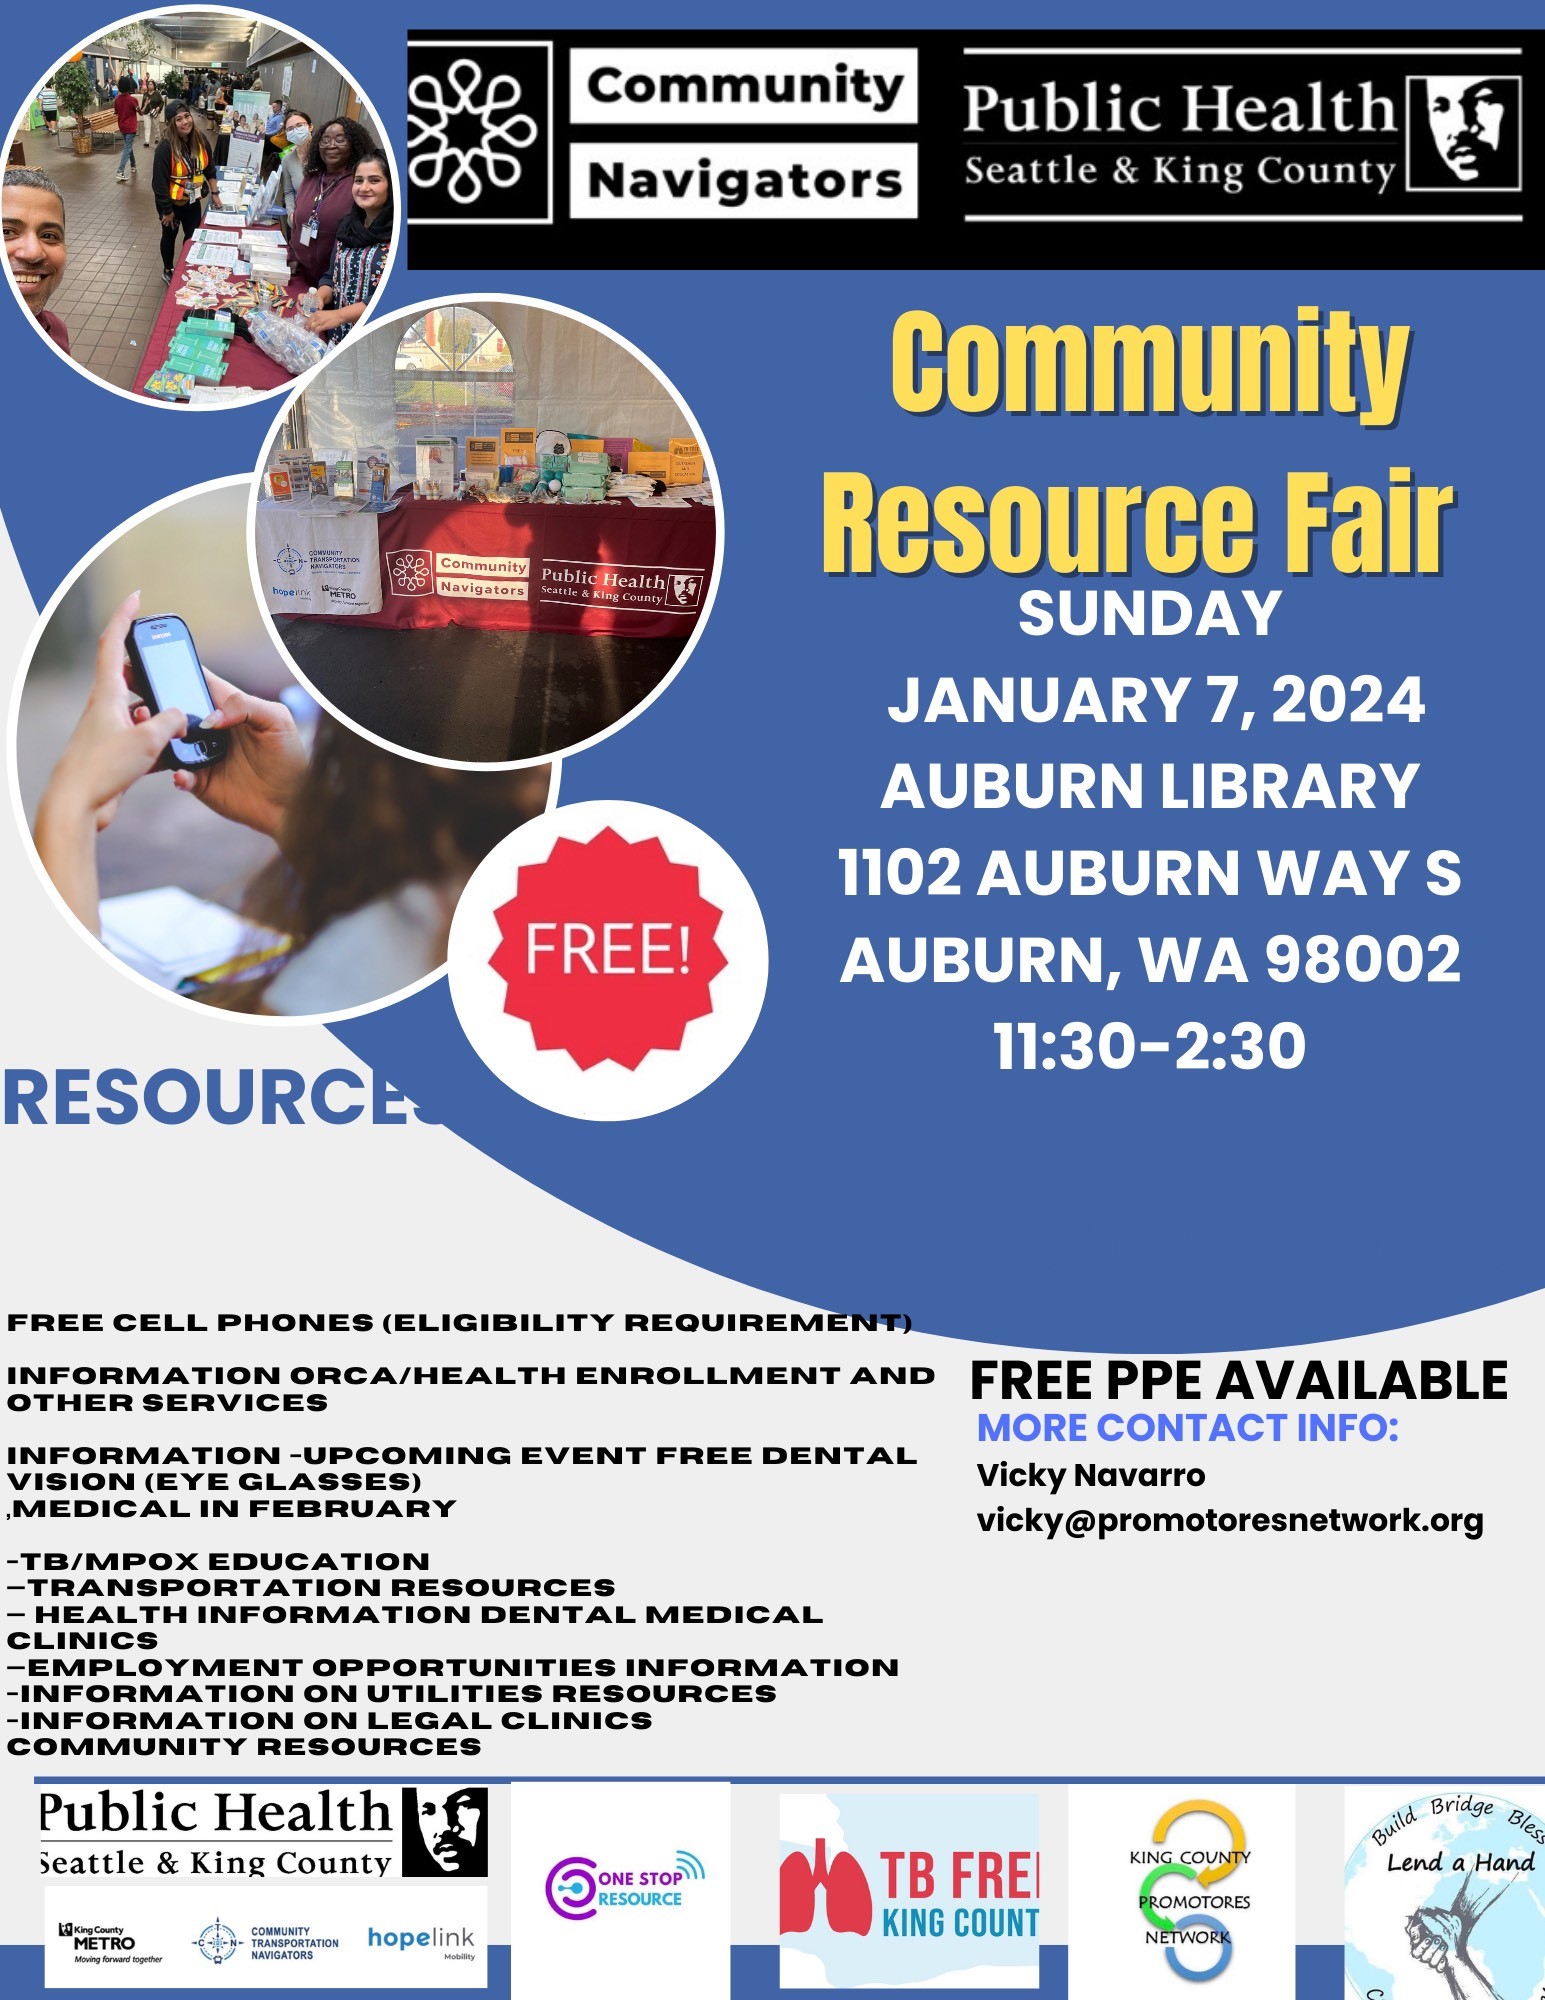 Community Resource Fair Jan 7 Auburn Library